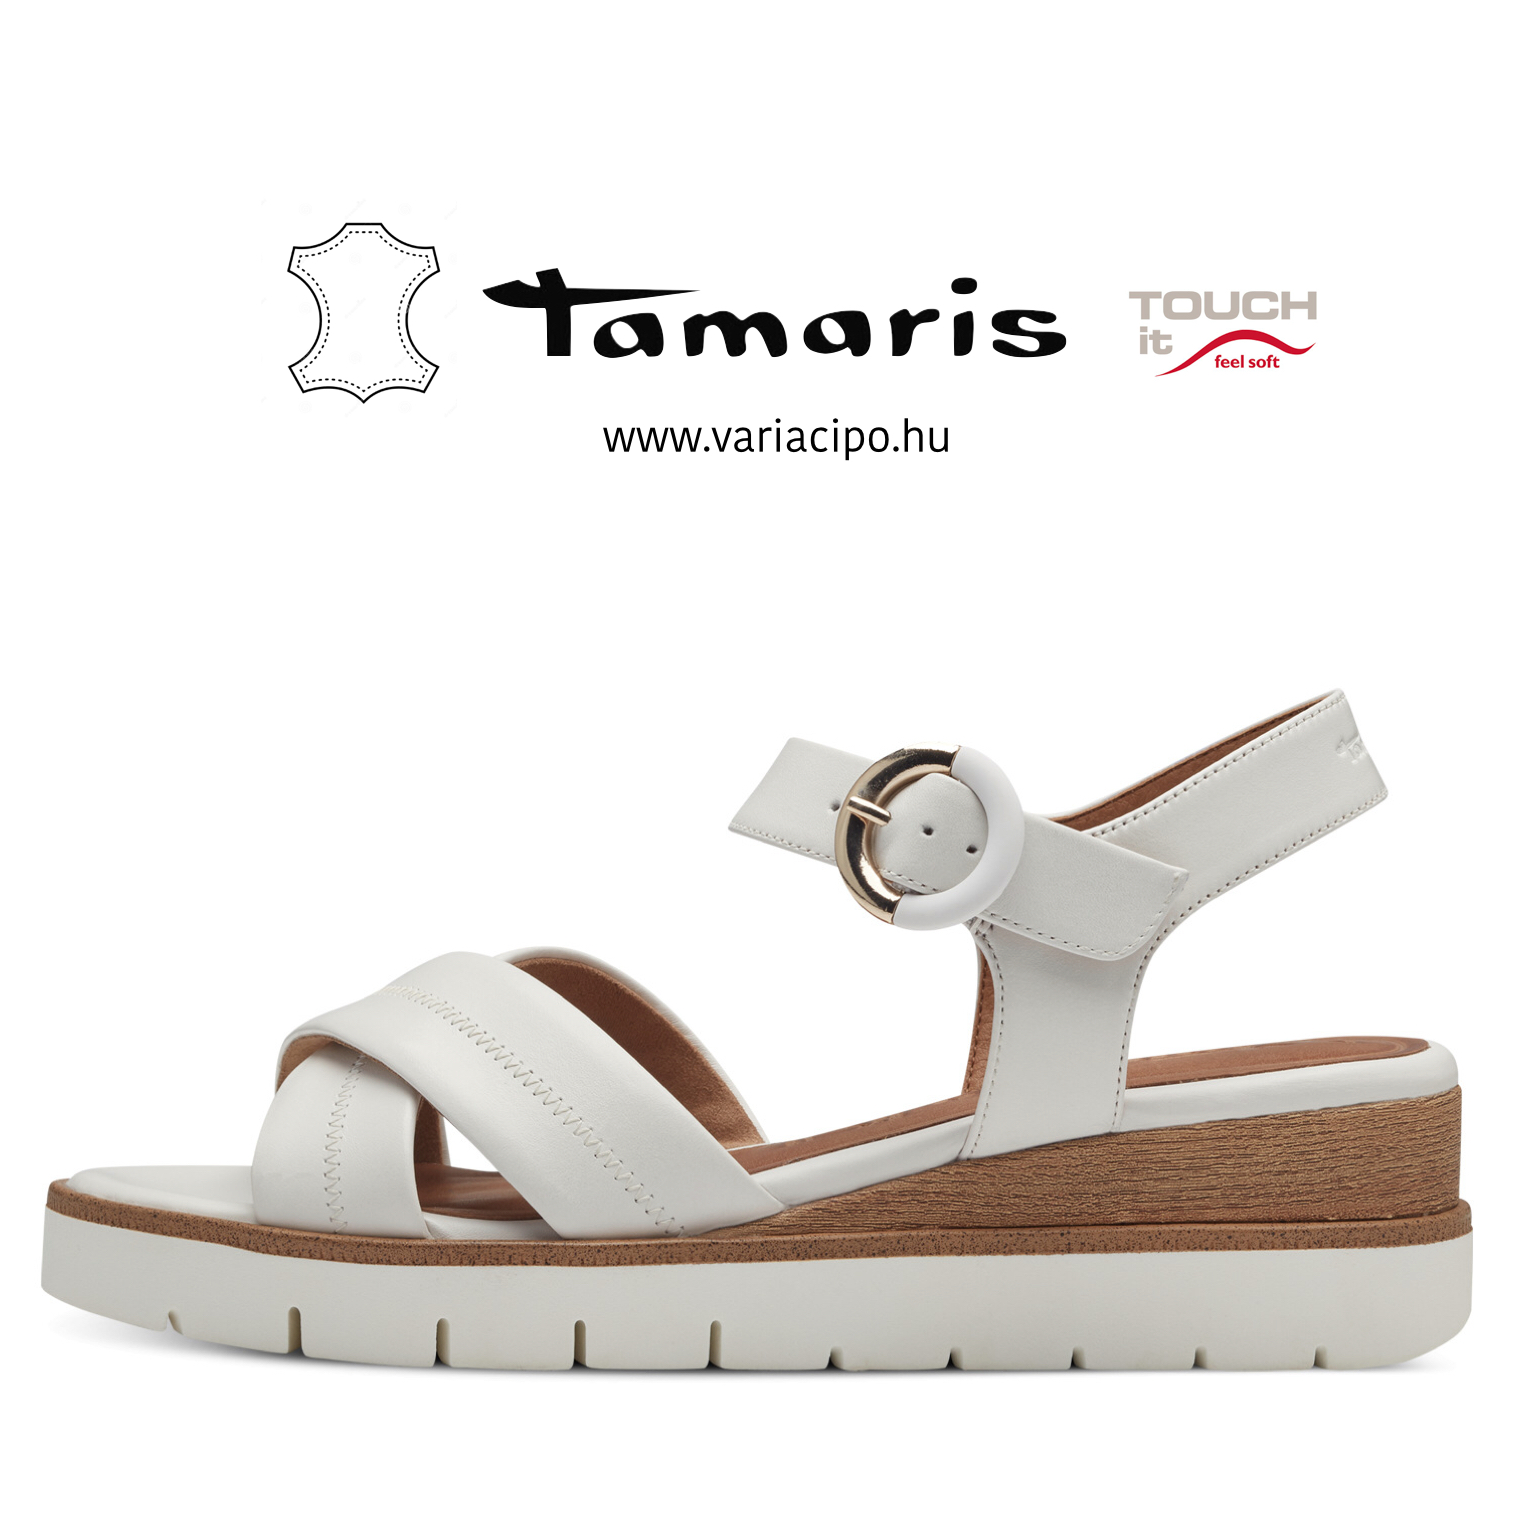 Tamaris bőr szandál fehér, 1-28202-42 117 white leather